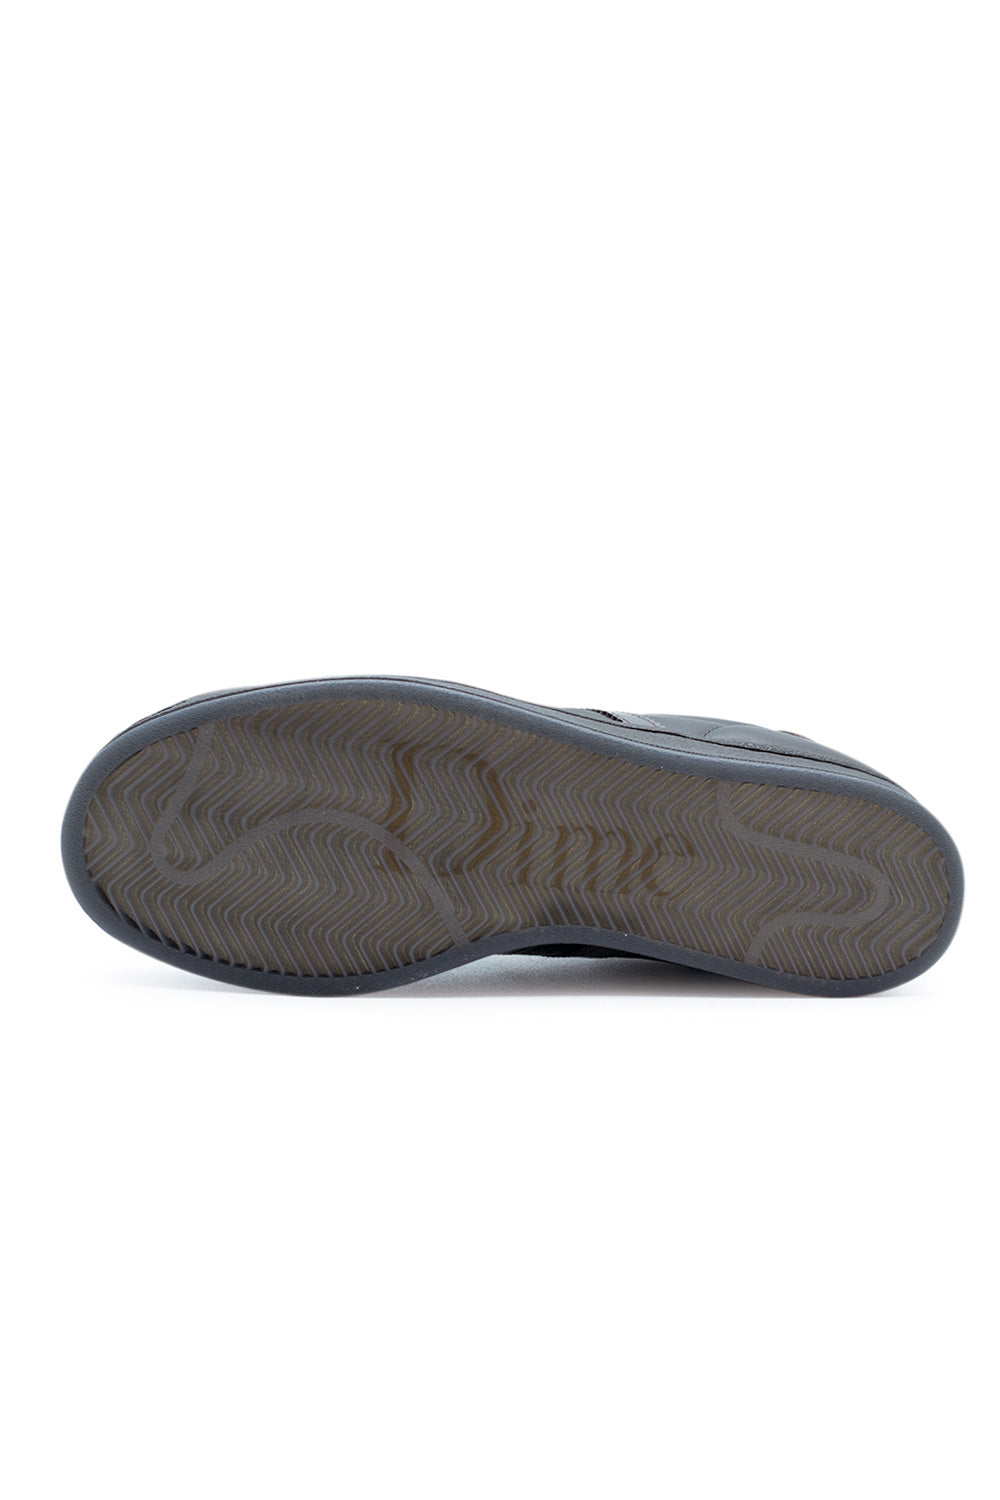 Adidas X Dime Superstar ADV Shoe Carbon / Grey Five / Brown - BONKERS